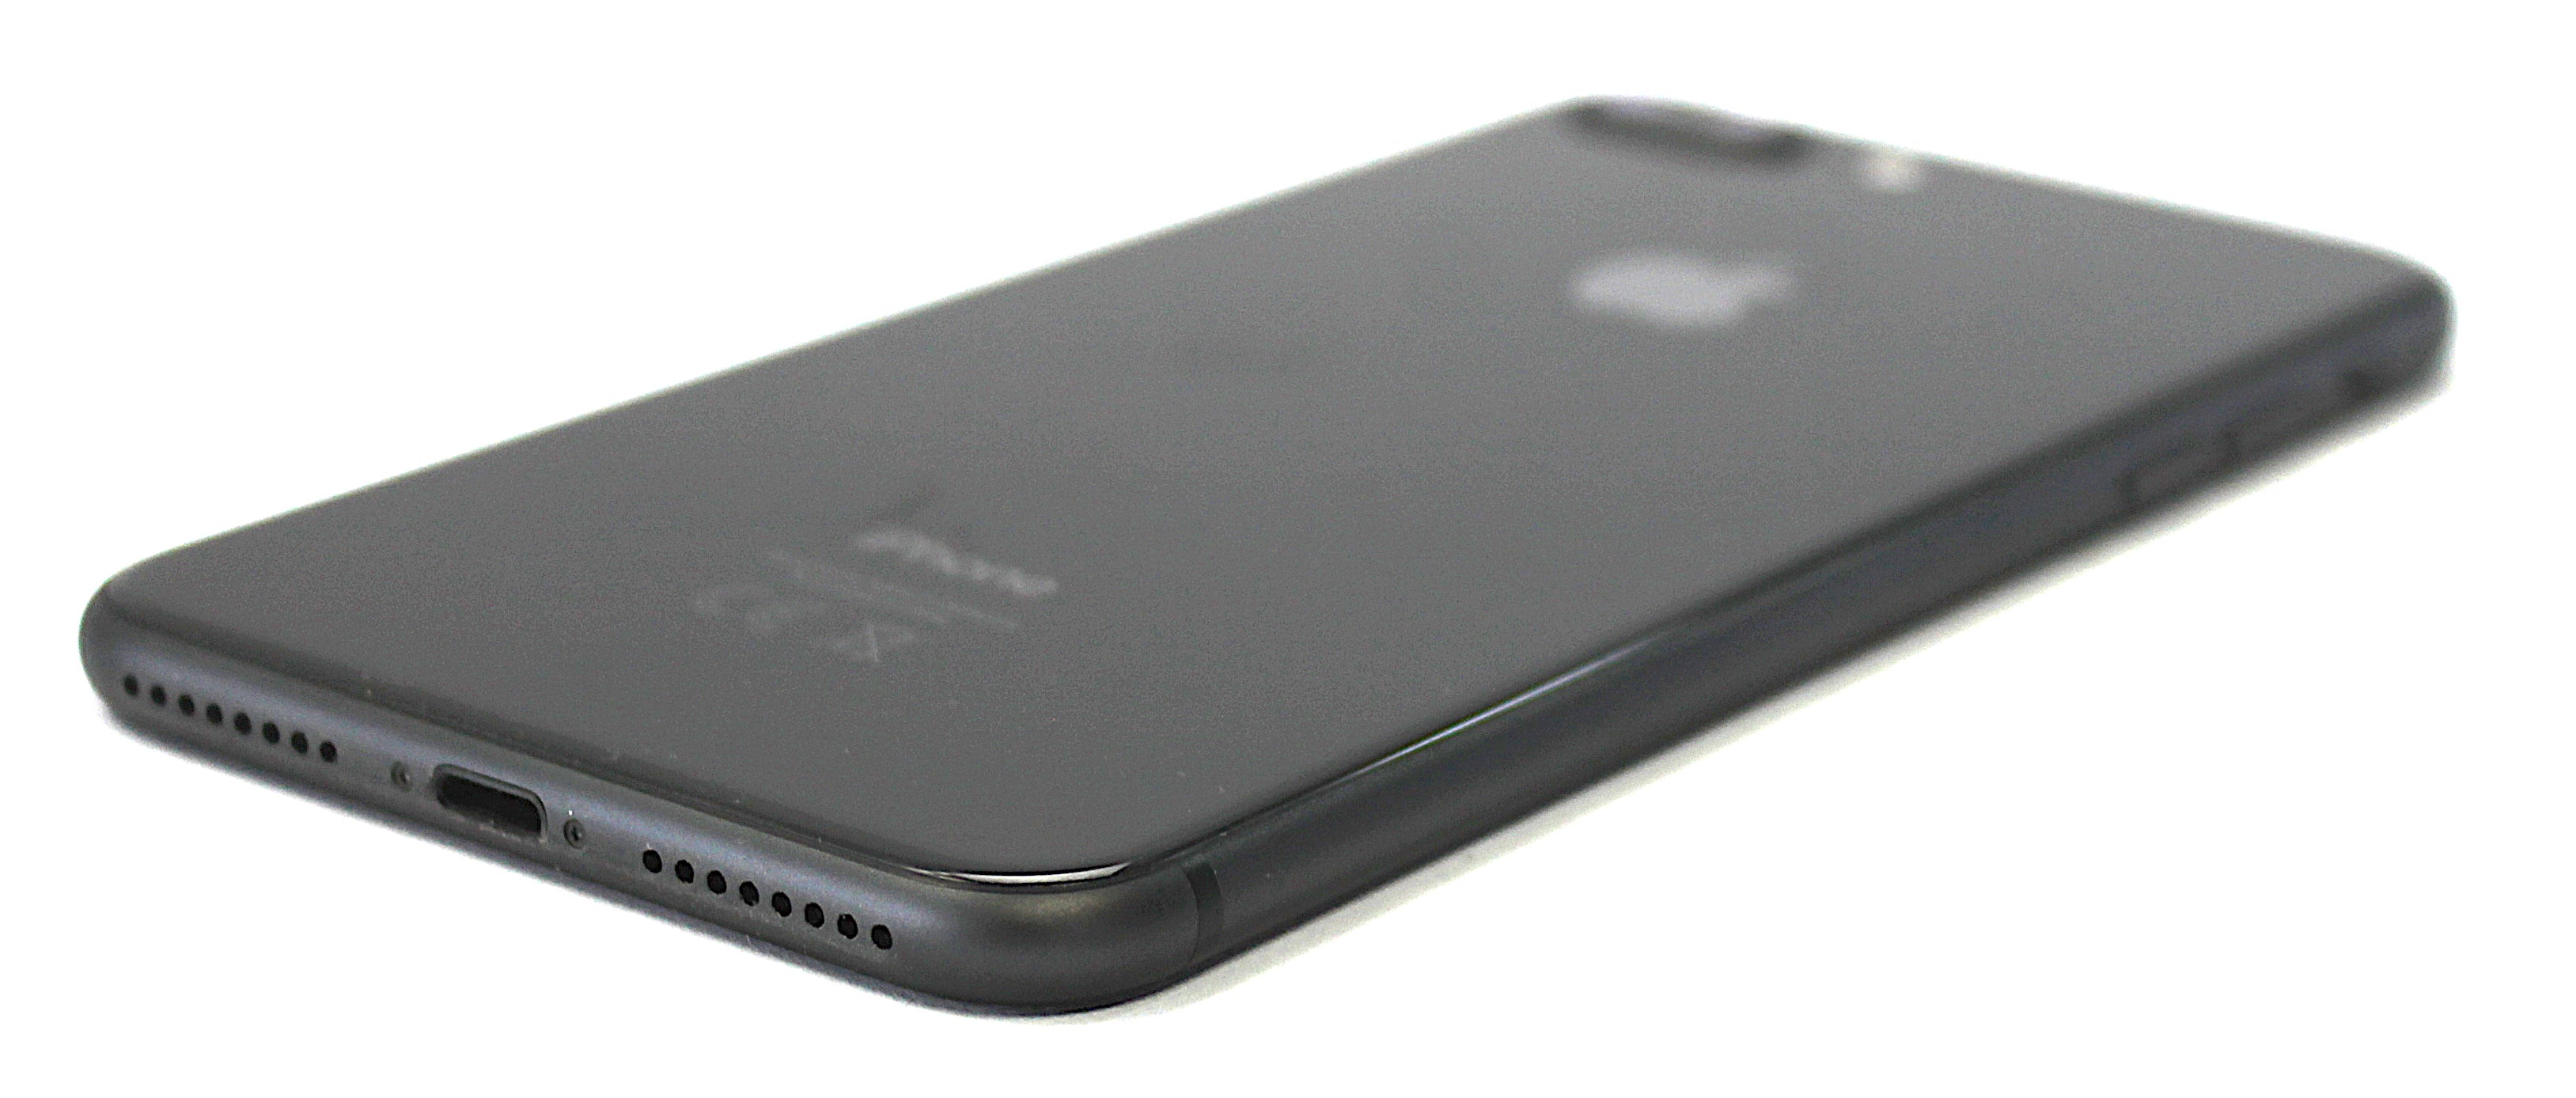 Apple iPhone 8 Plus Smartphone, 64GB, Network Unlocked, Black, A1897